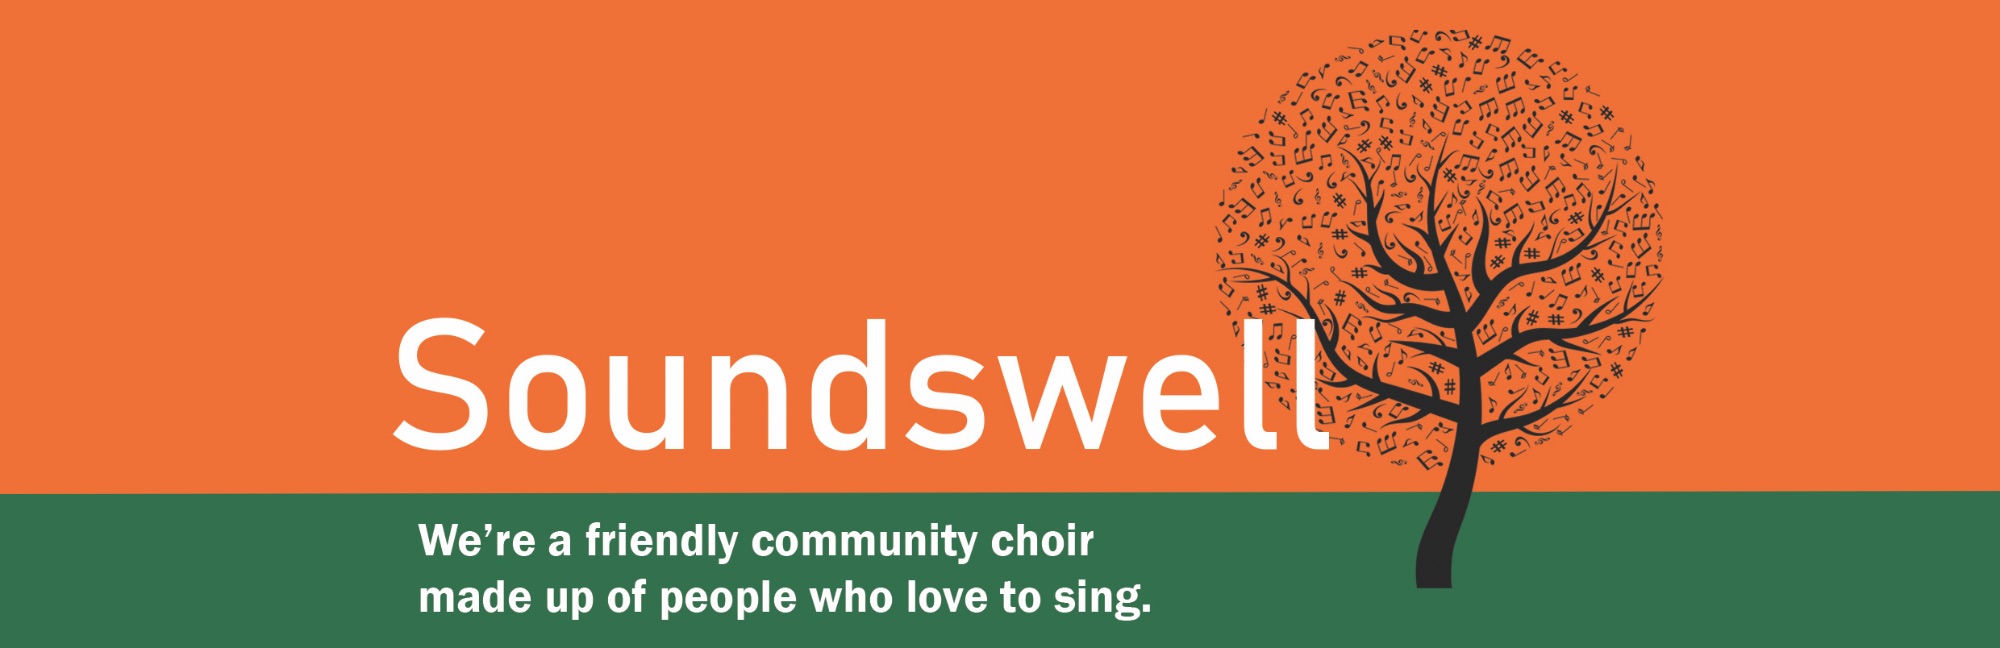 Soundswell logo